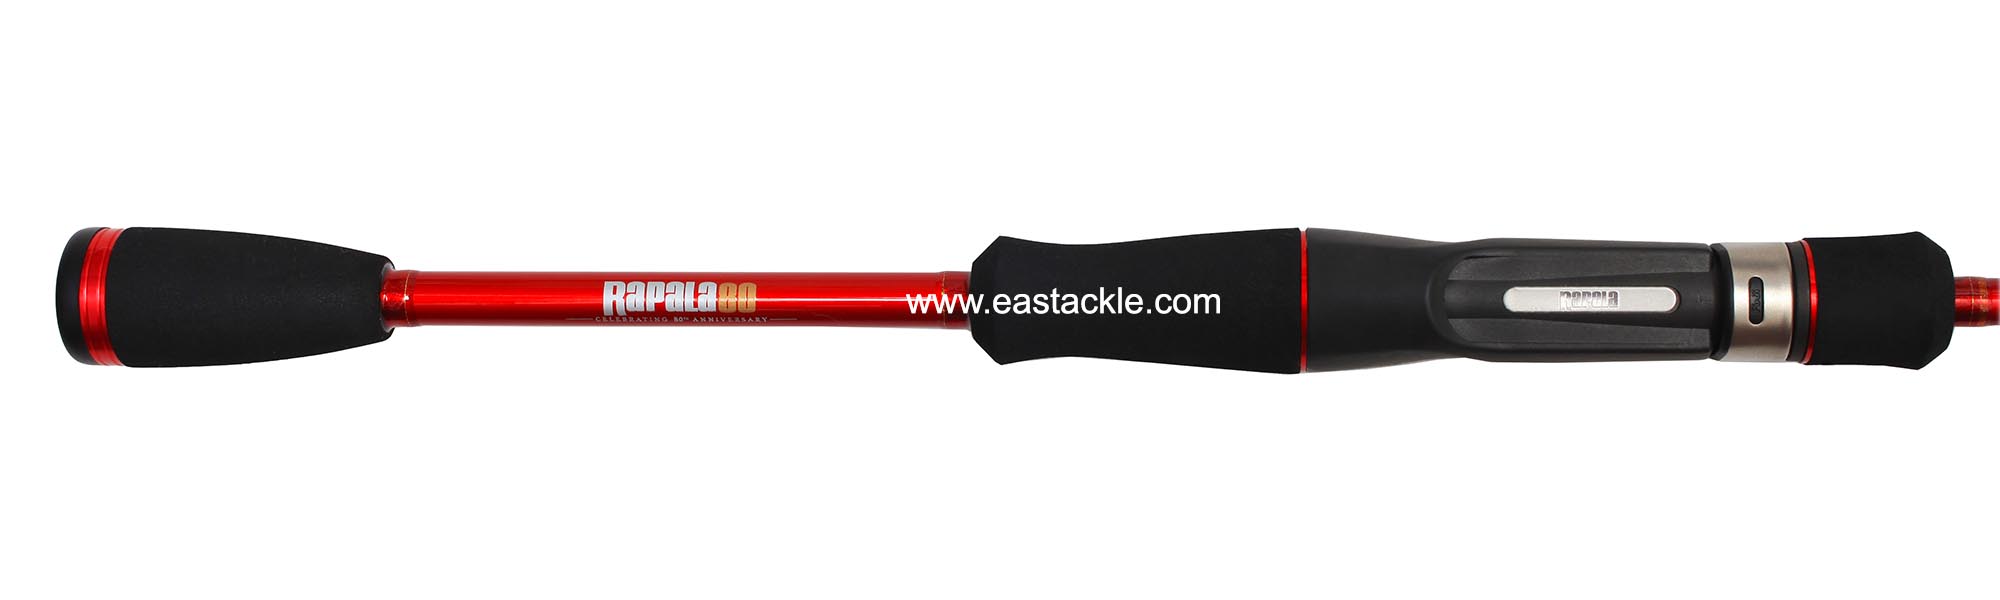 Rapala - Vaaksy - VAC662L - Baitcasting Rod - Handle Section - Top View | Eastackle